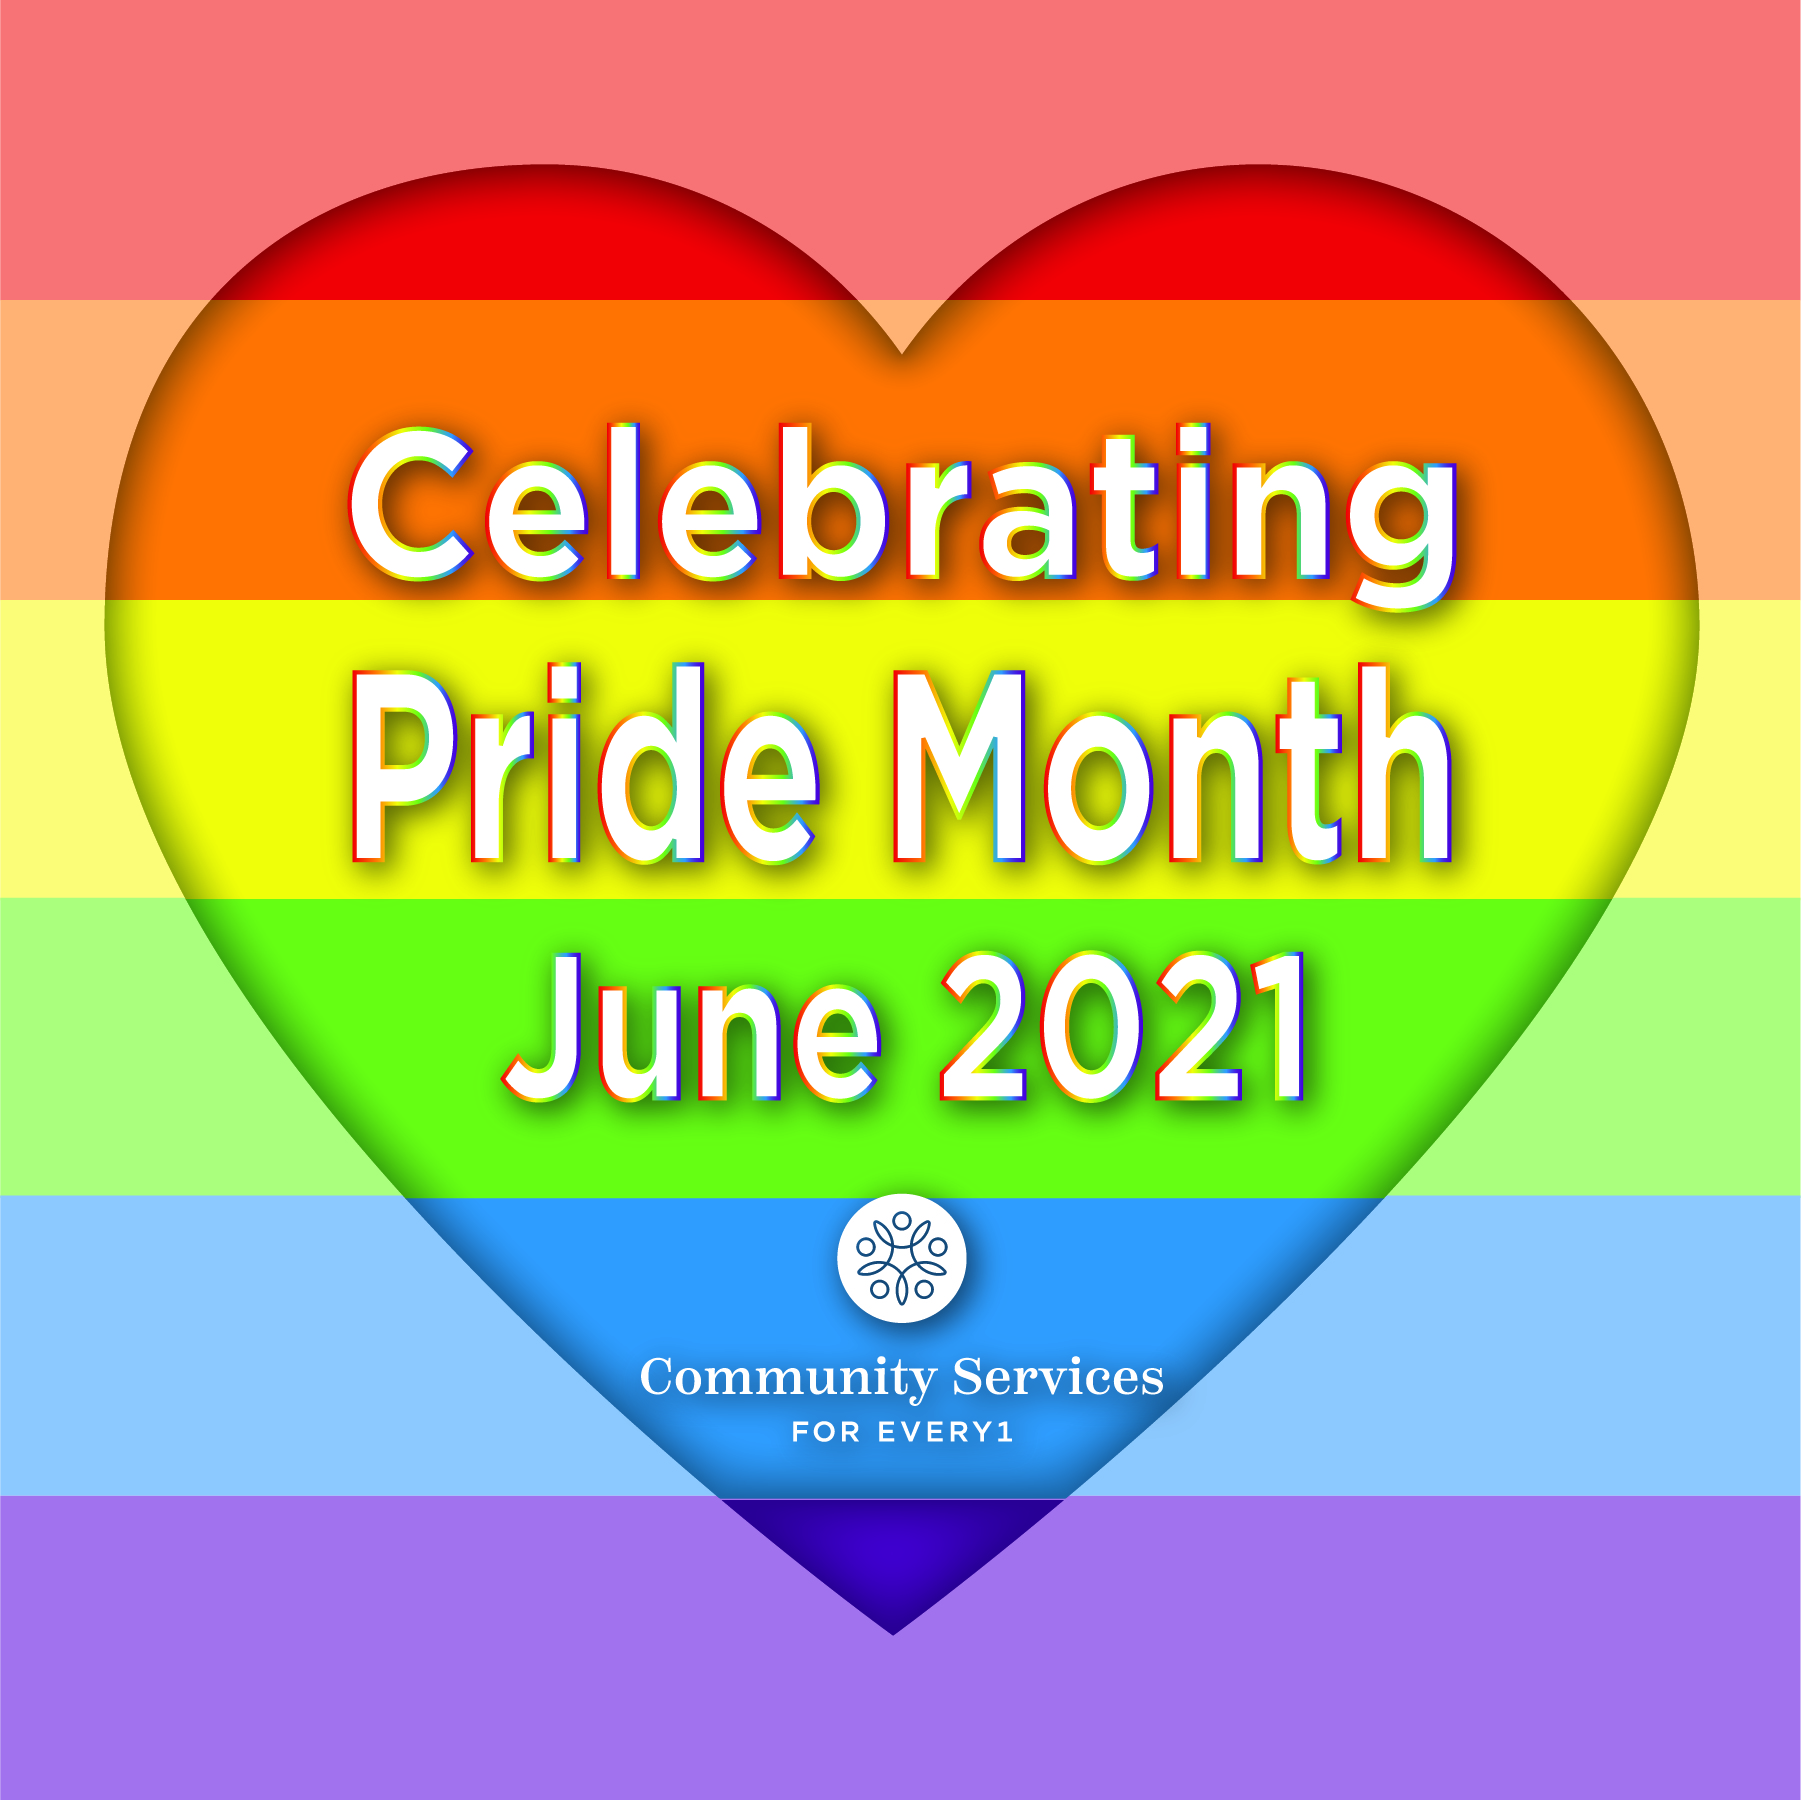 Celebrating Pride Month June 2021